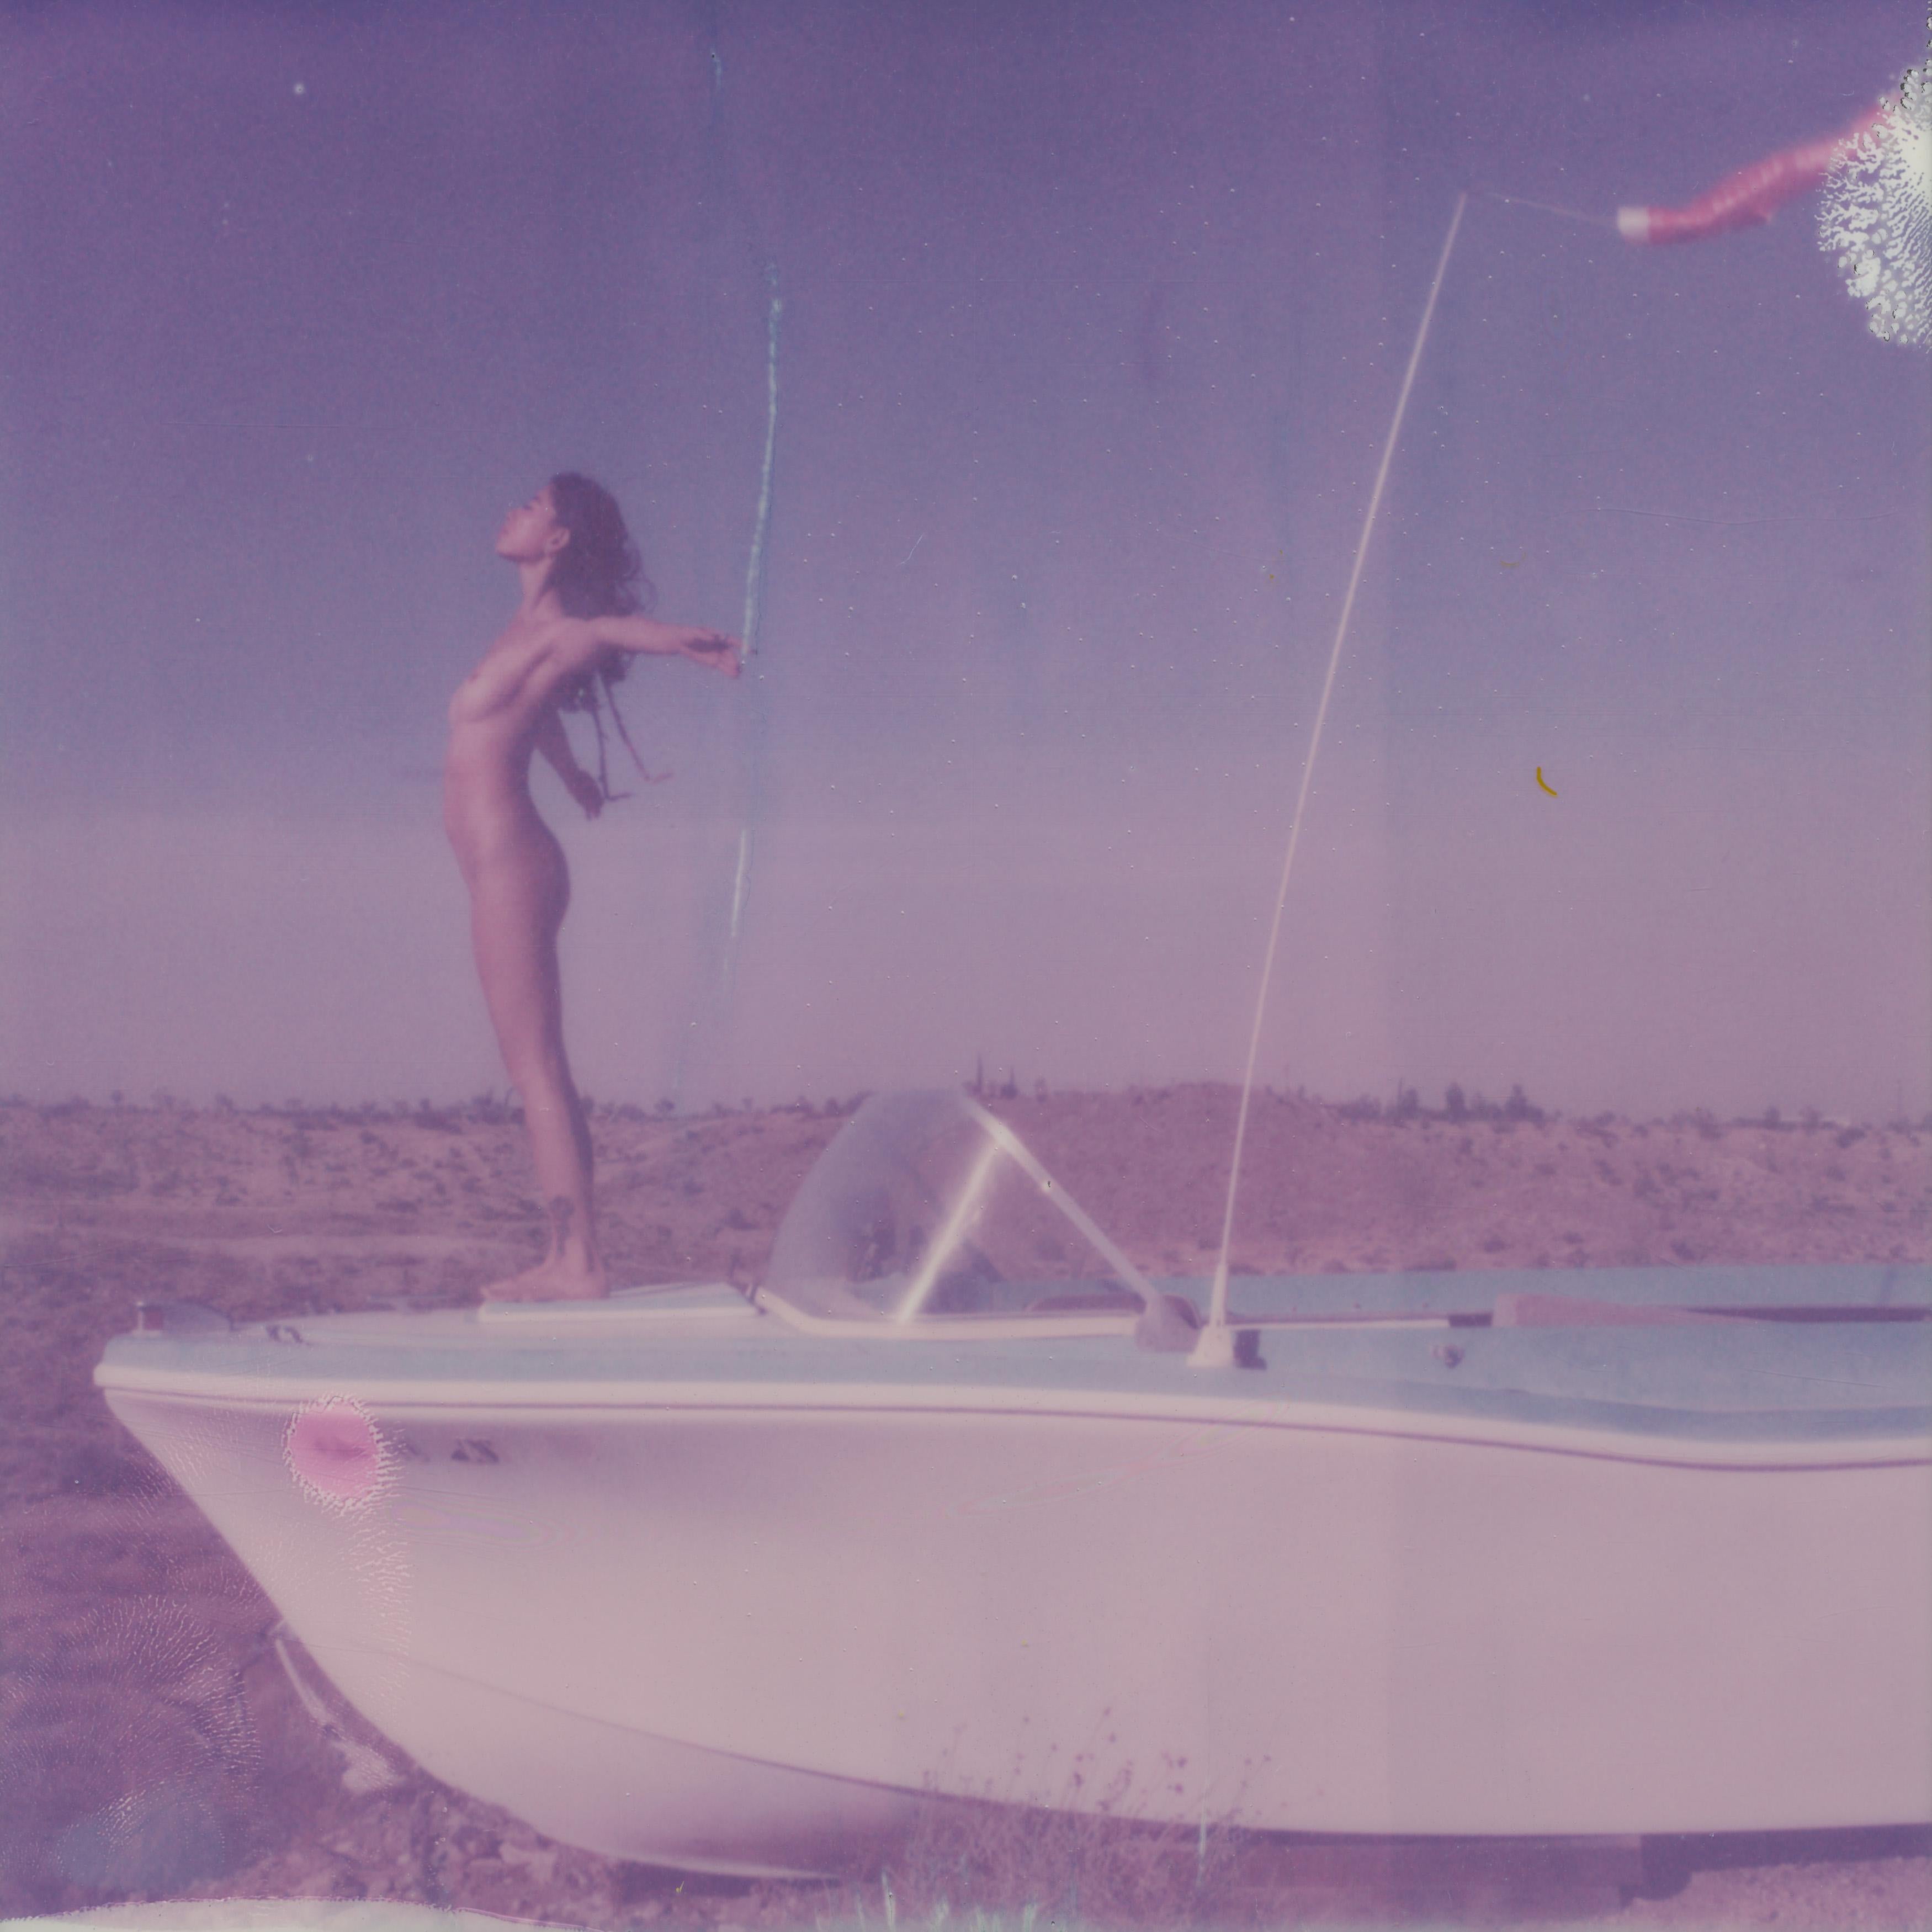 Kirsten Thys van den Audenaerde Color Photograph - Boat to Nowhere - Contemporary, Polaroid, Nude, 21st Century, Joshua Tree